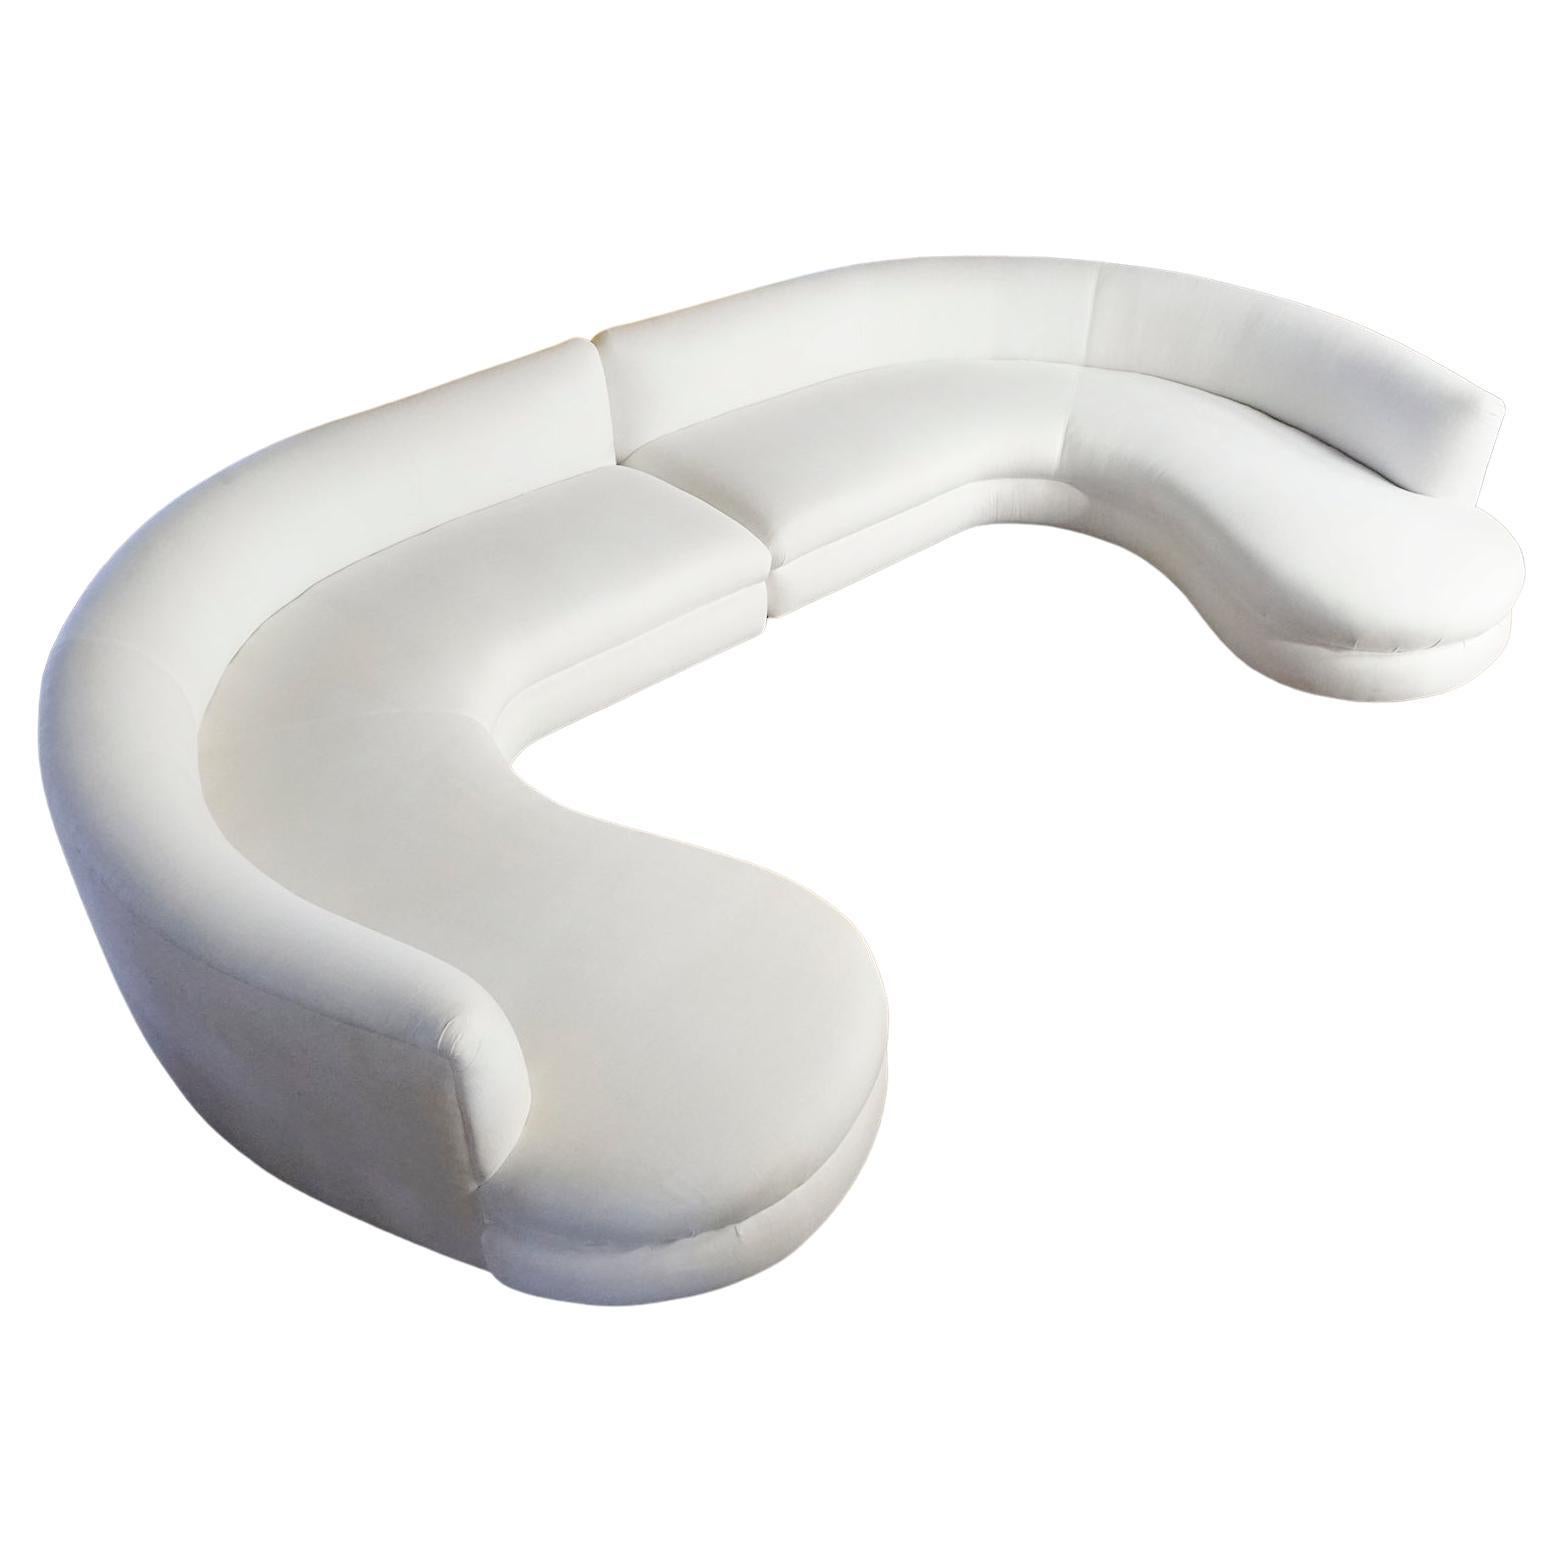 Large U shape Sectional Sofa in the Style of Vladimir Kagan's Cloud Sofa Designs